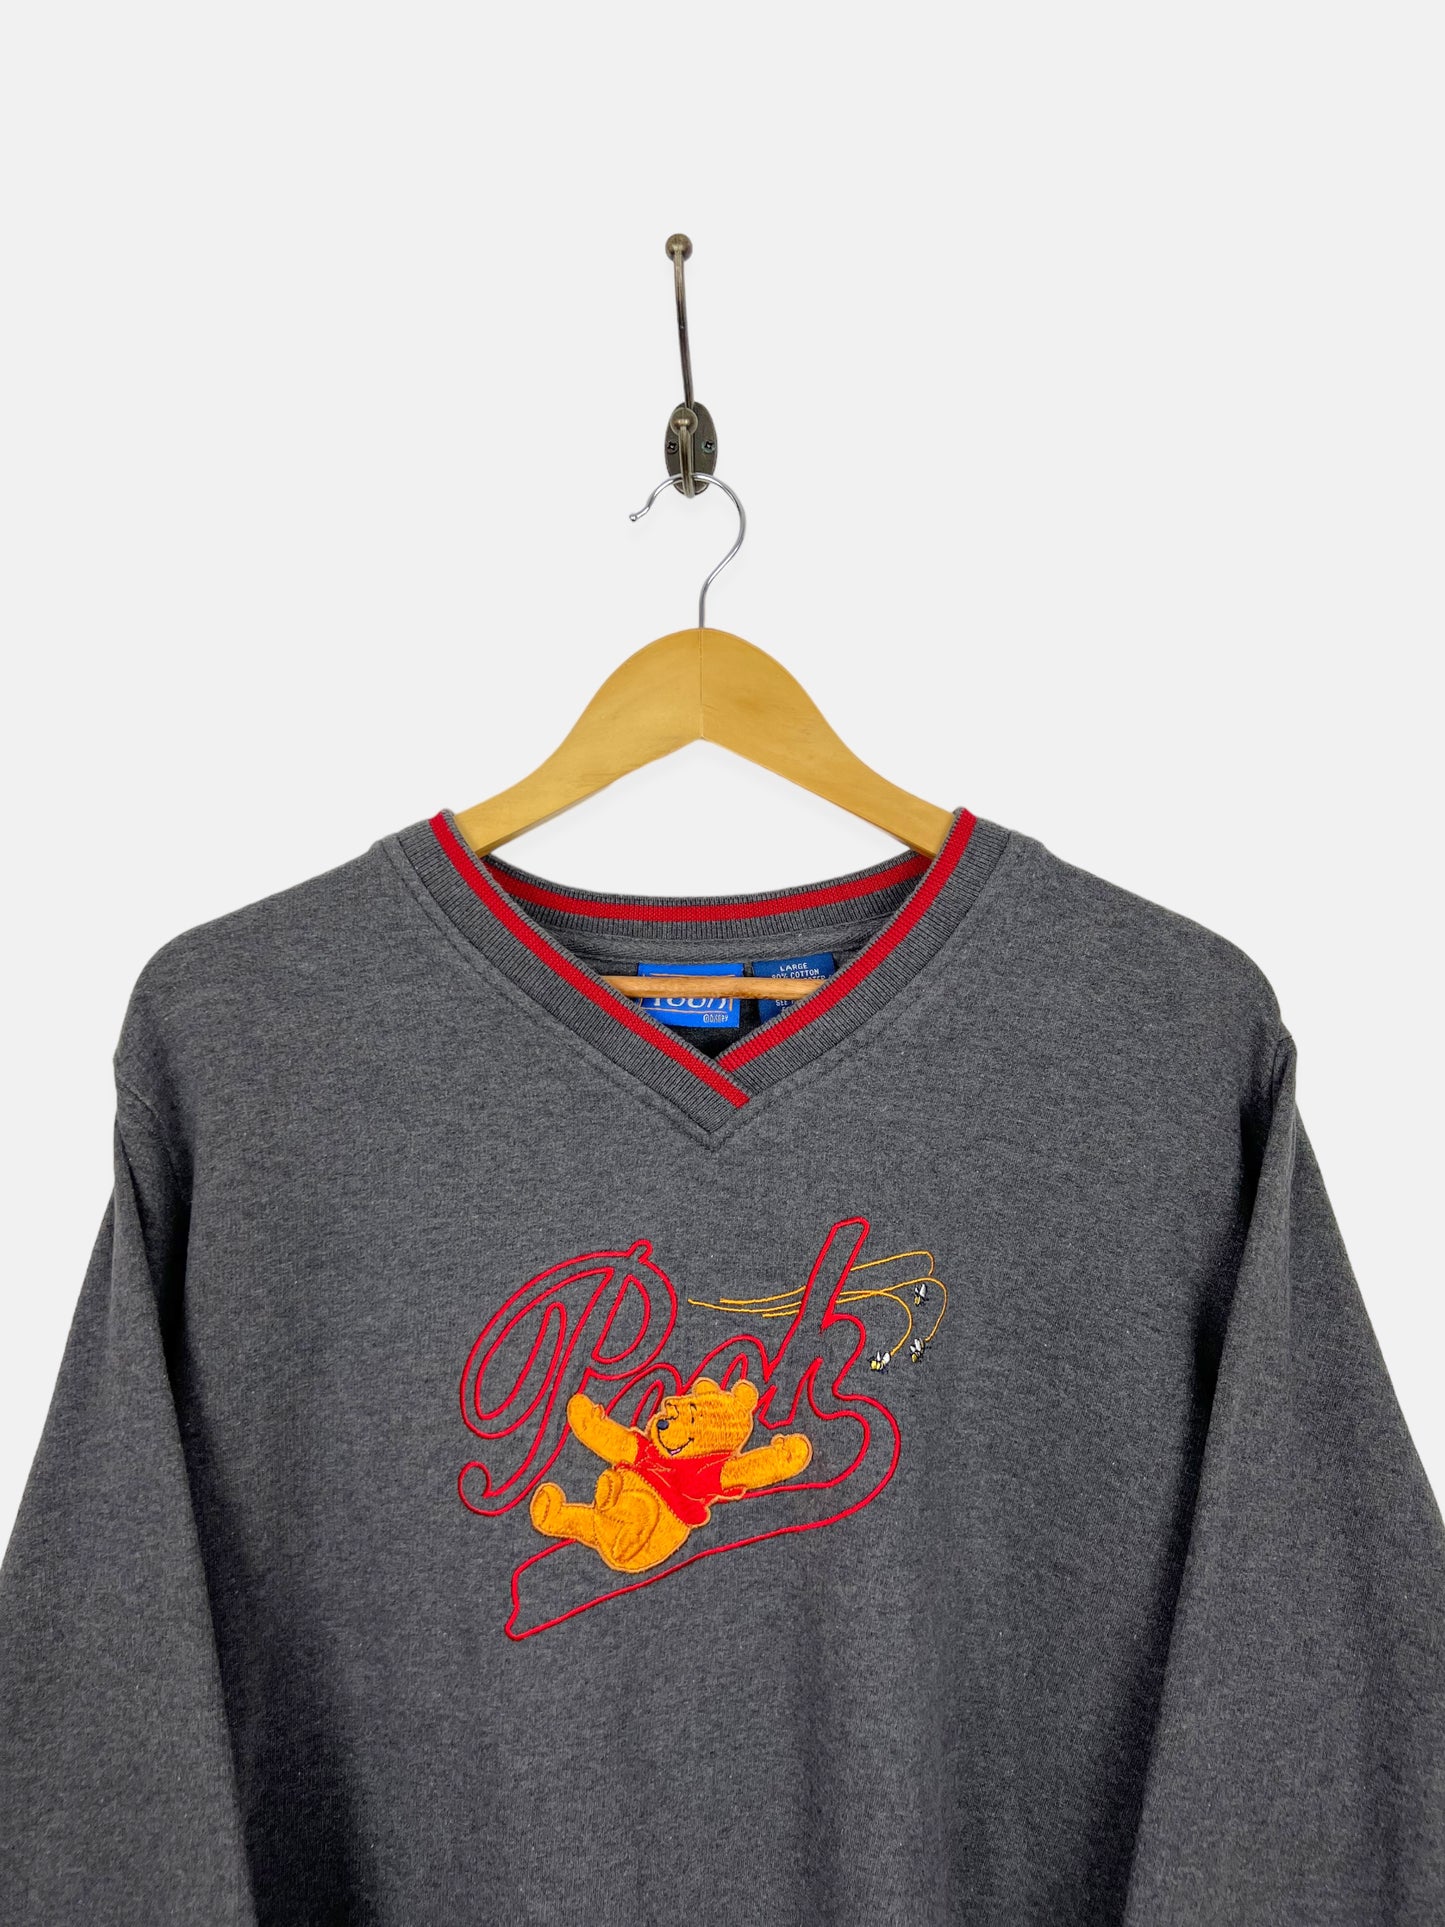 90's Disney Winnie The Pooh Embroidered Vintage Sweatshirt Size 12